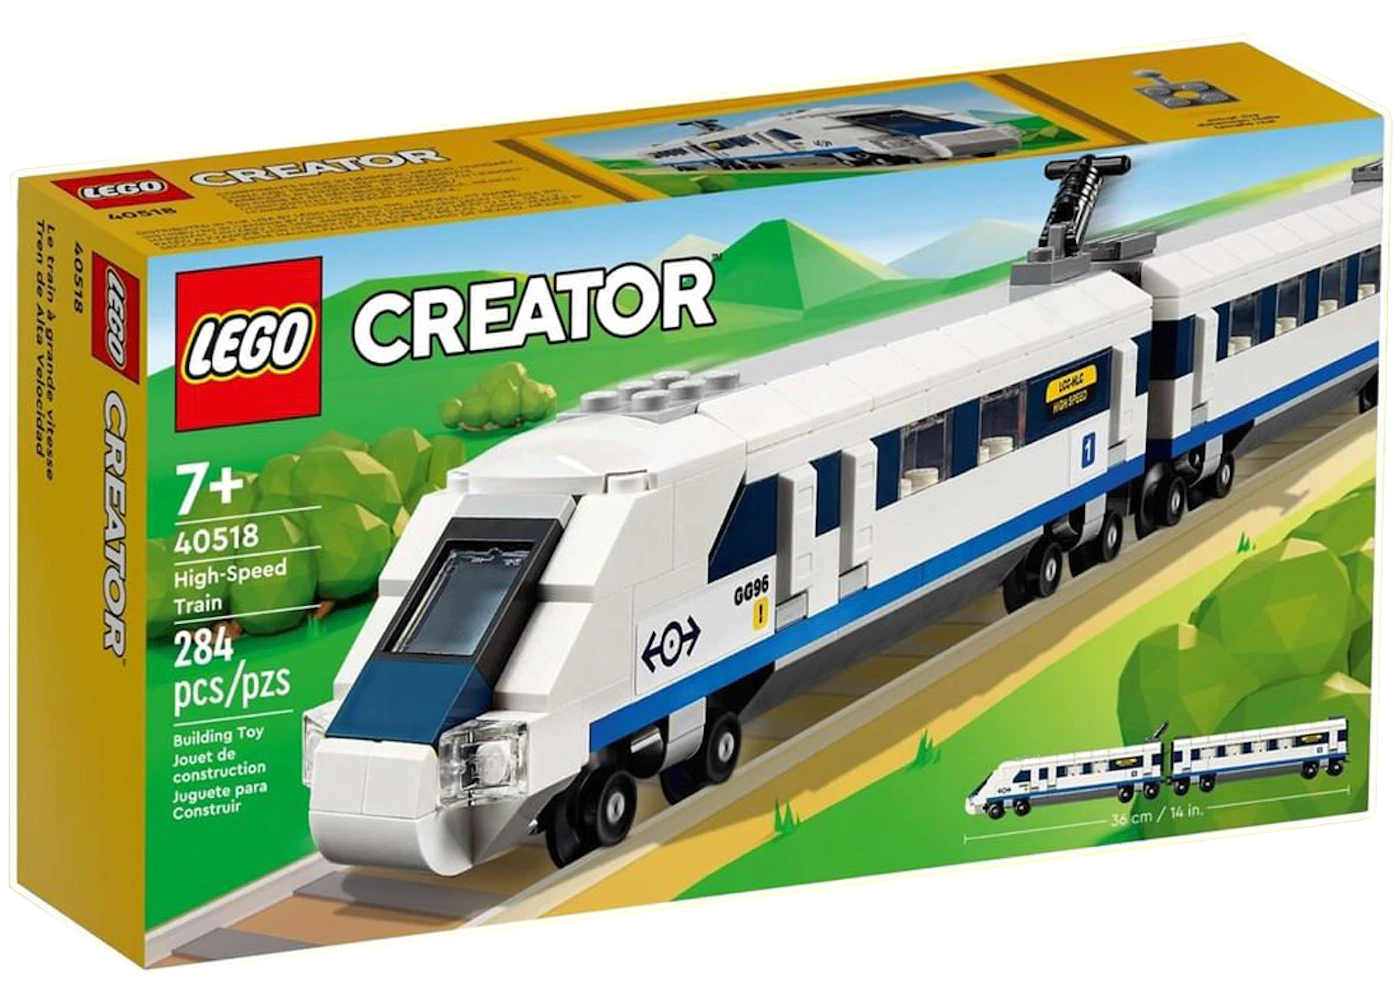 LEGO Creator High-Speed Train Set 40518 - FW21 - US